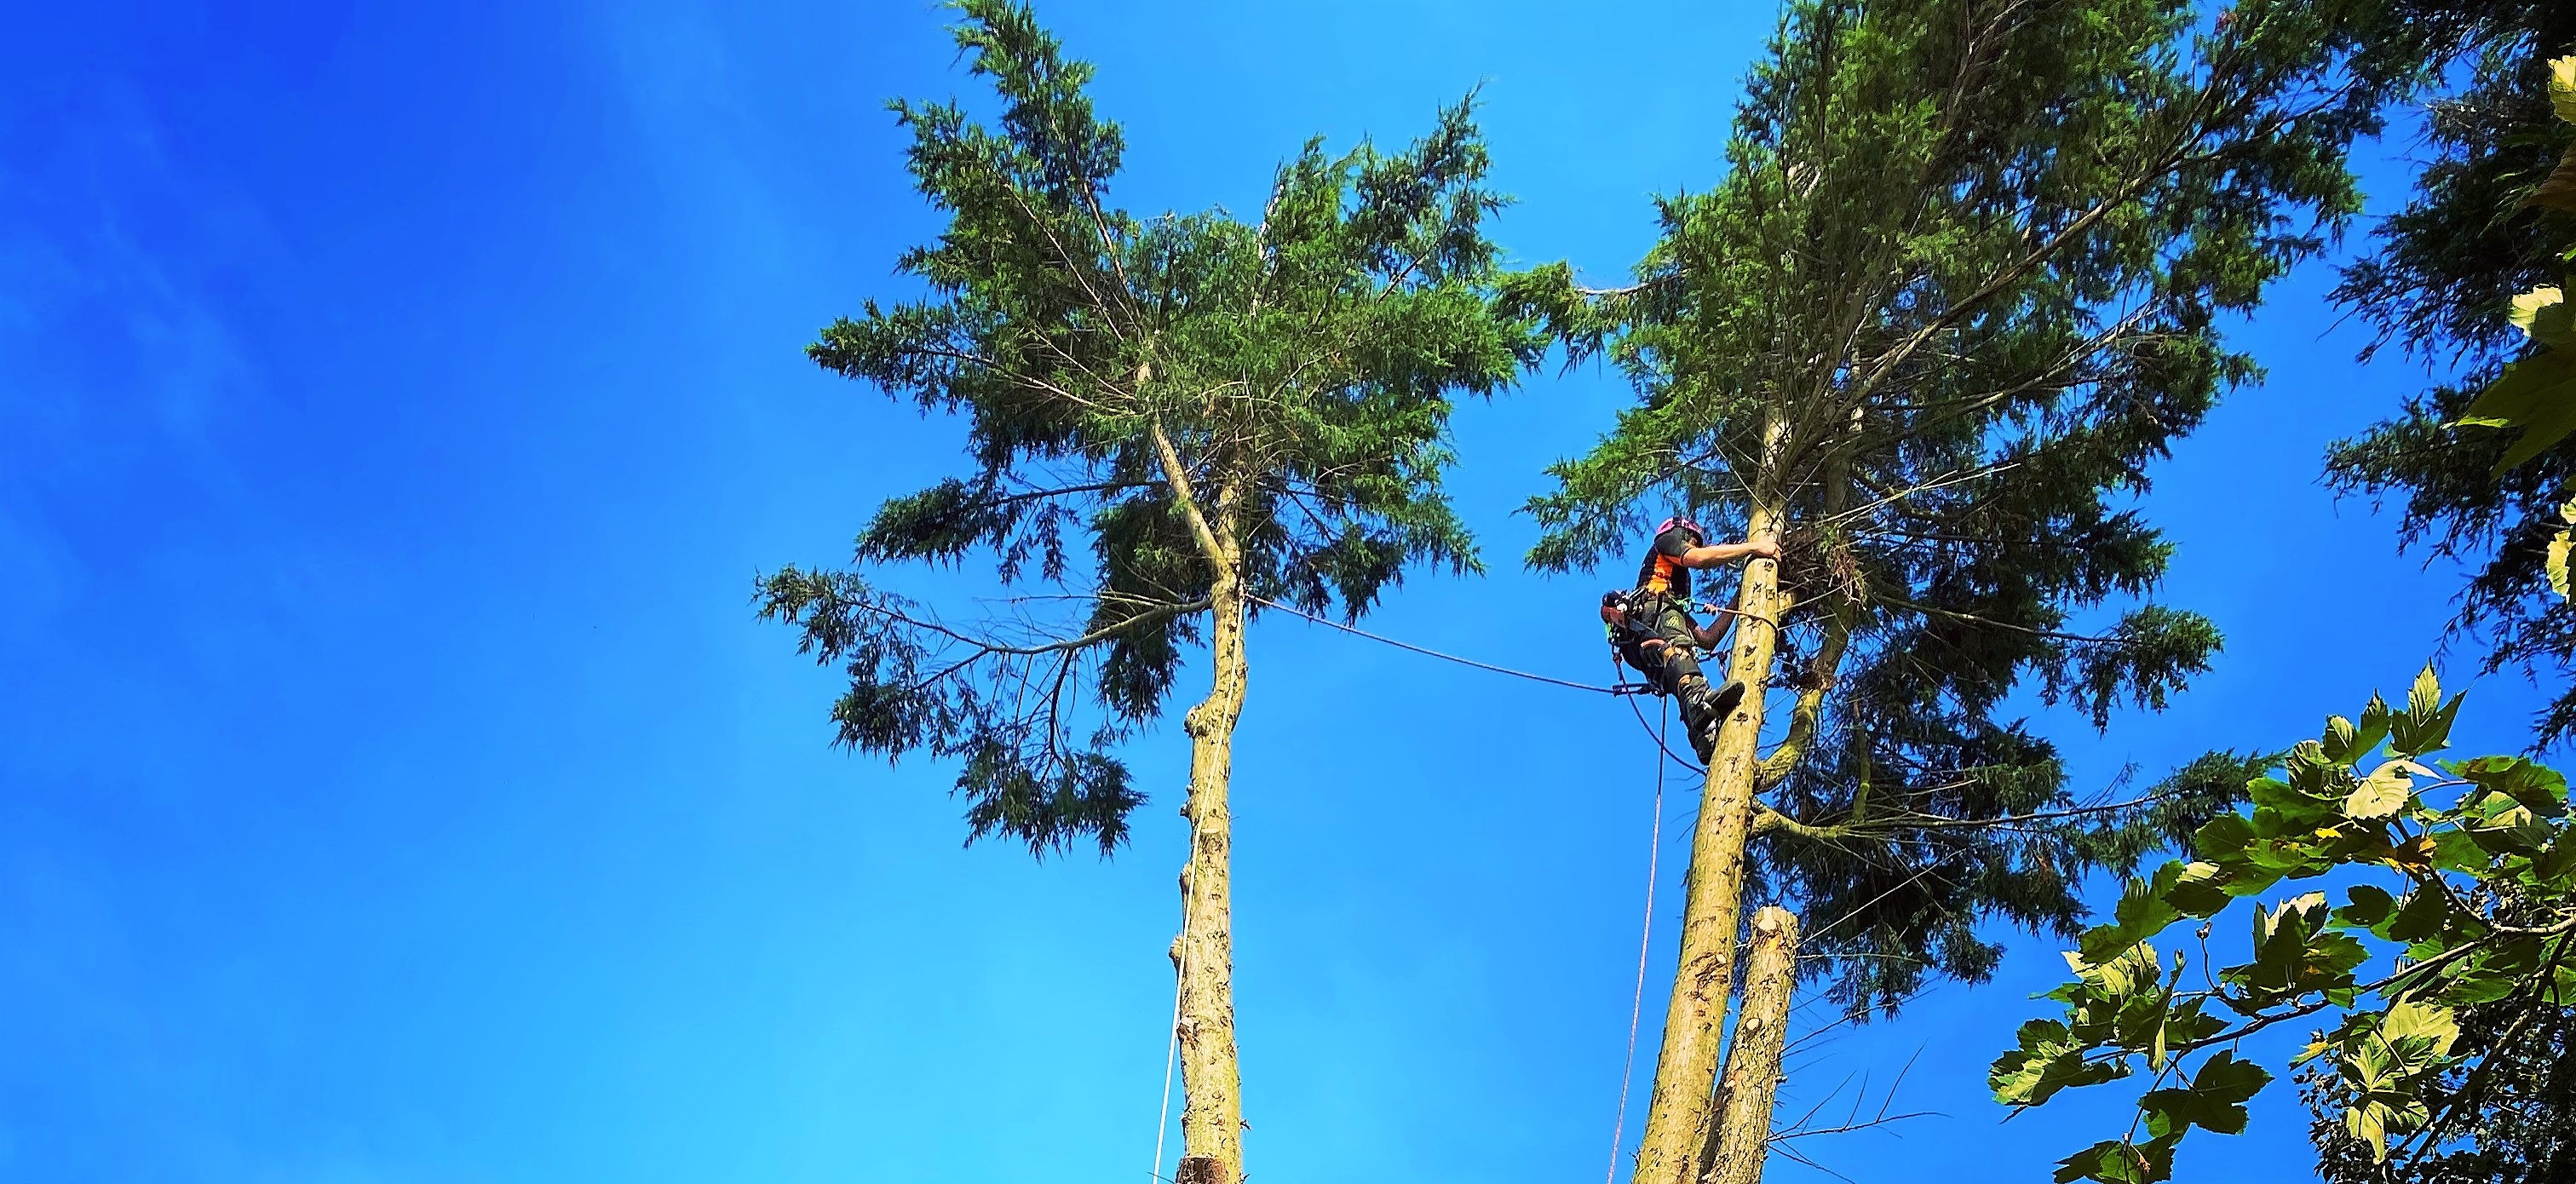 Tree surgery Dorchester in Dorset - Dorset Treeworx Ltd offering tree surgery services,tree